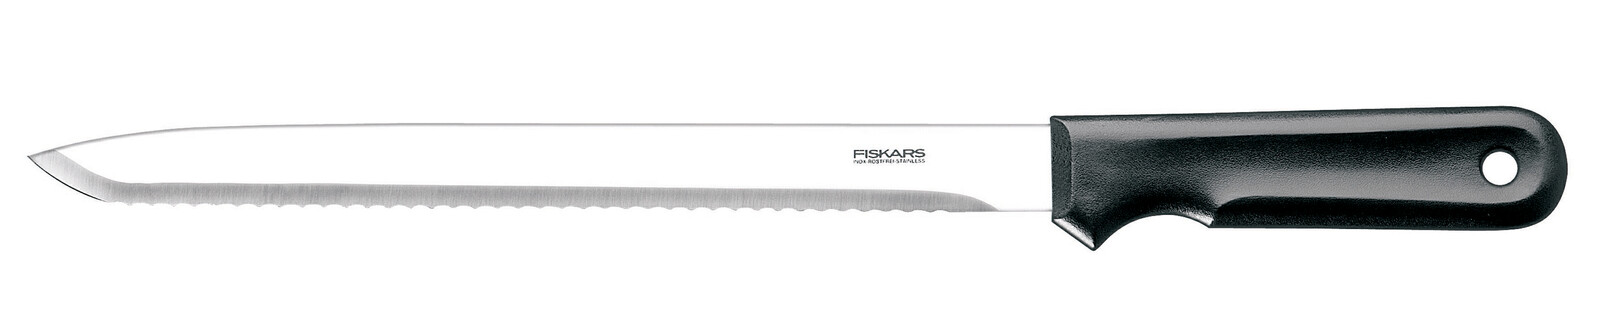 Нож нескладной Fiskars 1001626